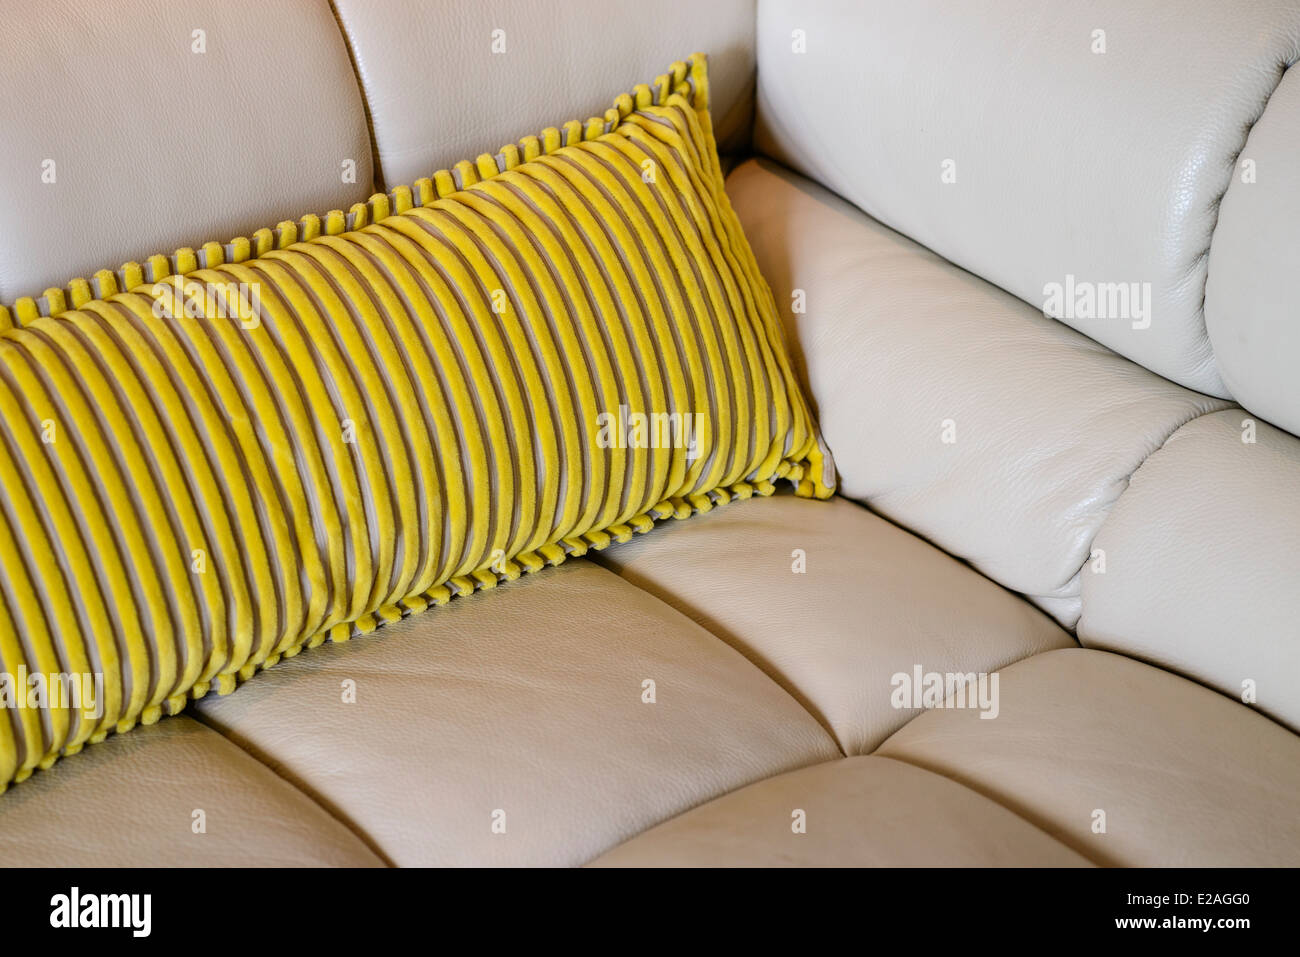 https://c8.alamy.com/comp/E2AGG0/yellow-cushion-on-a-beige-leather-sofa-E2AGG0.jpg